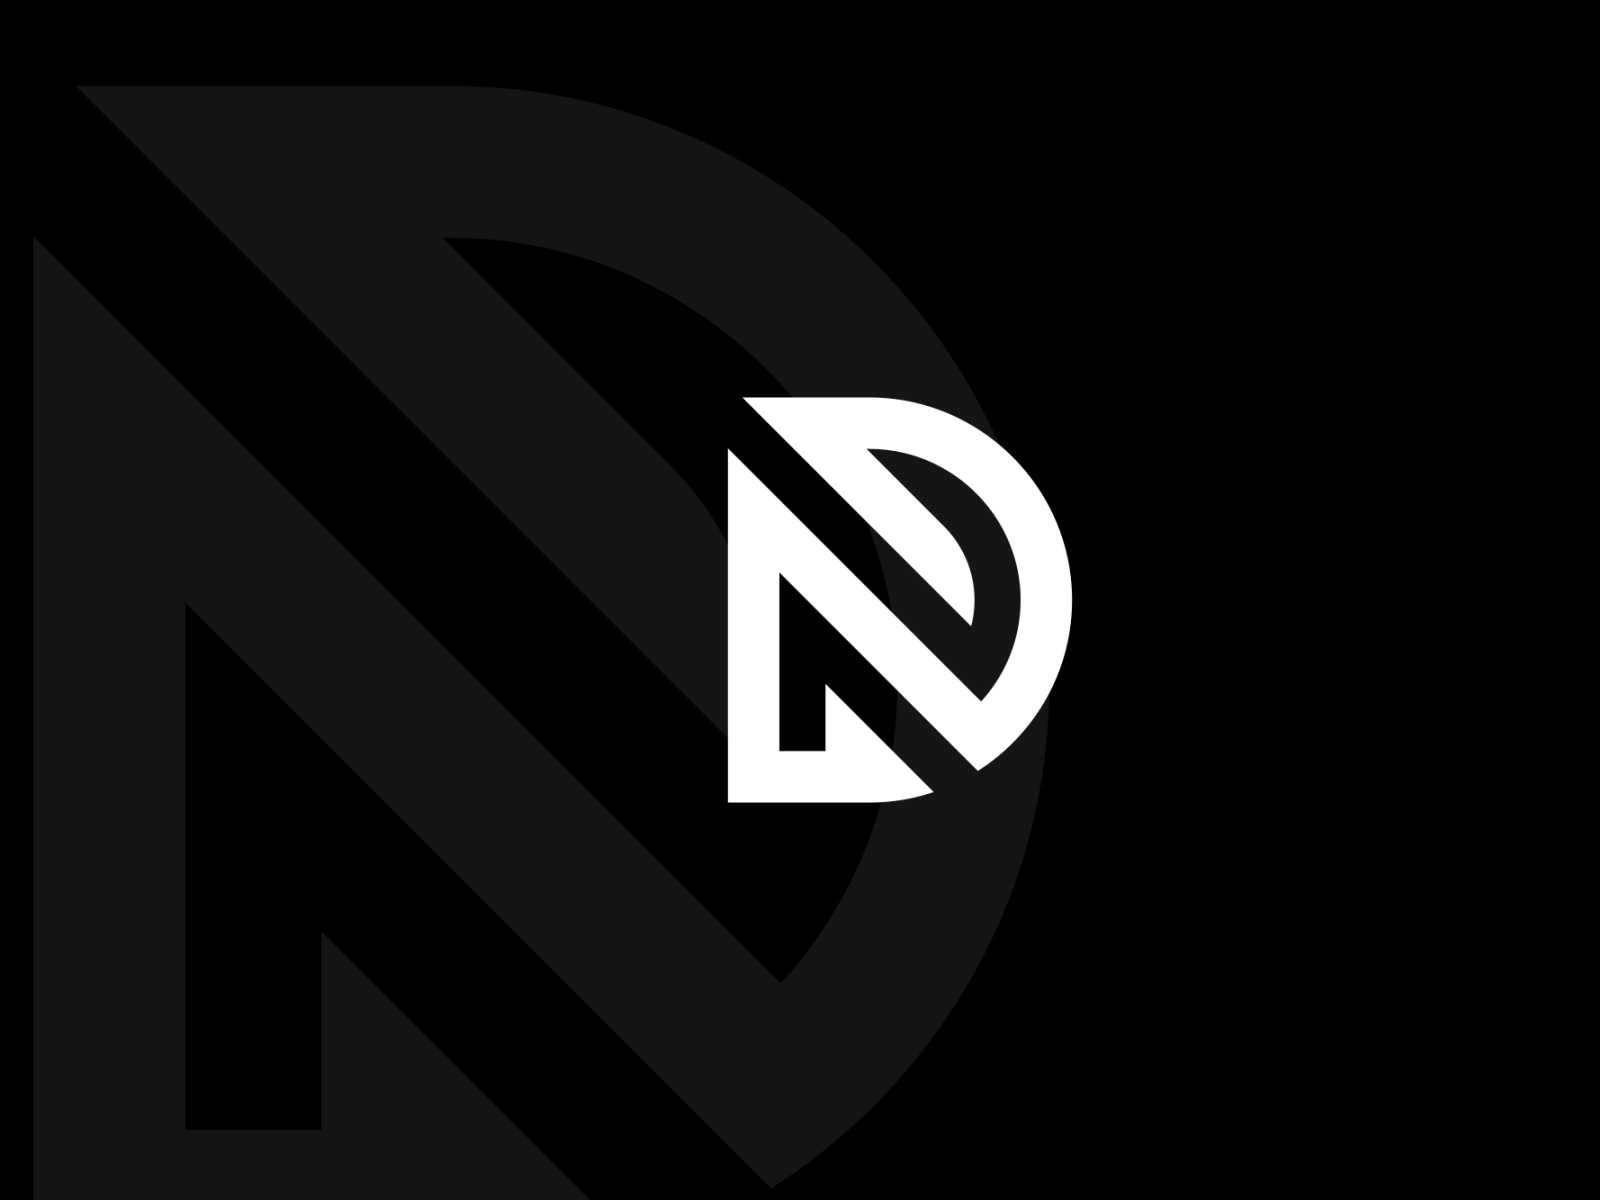 Dn modern letter logo design with swoosh Vector Image